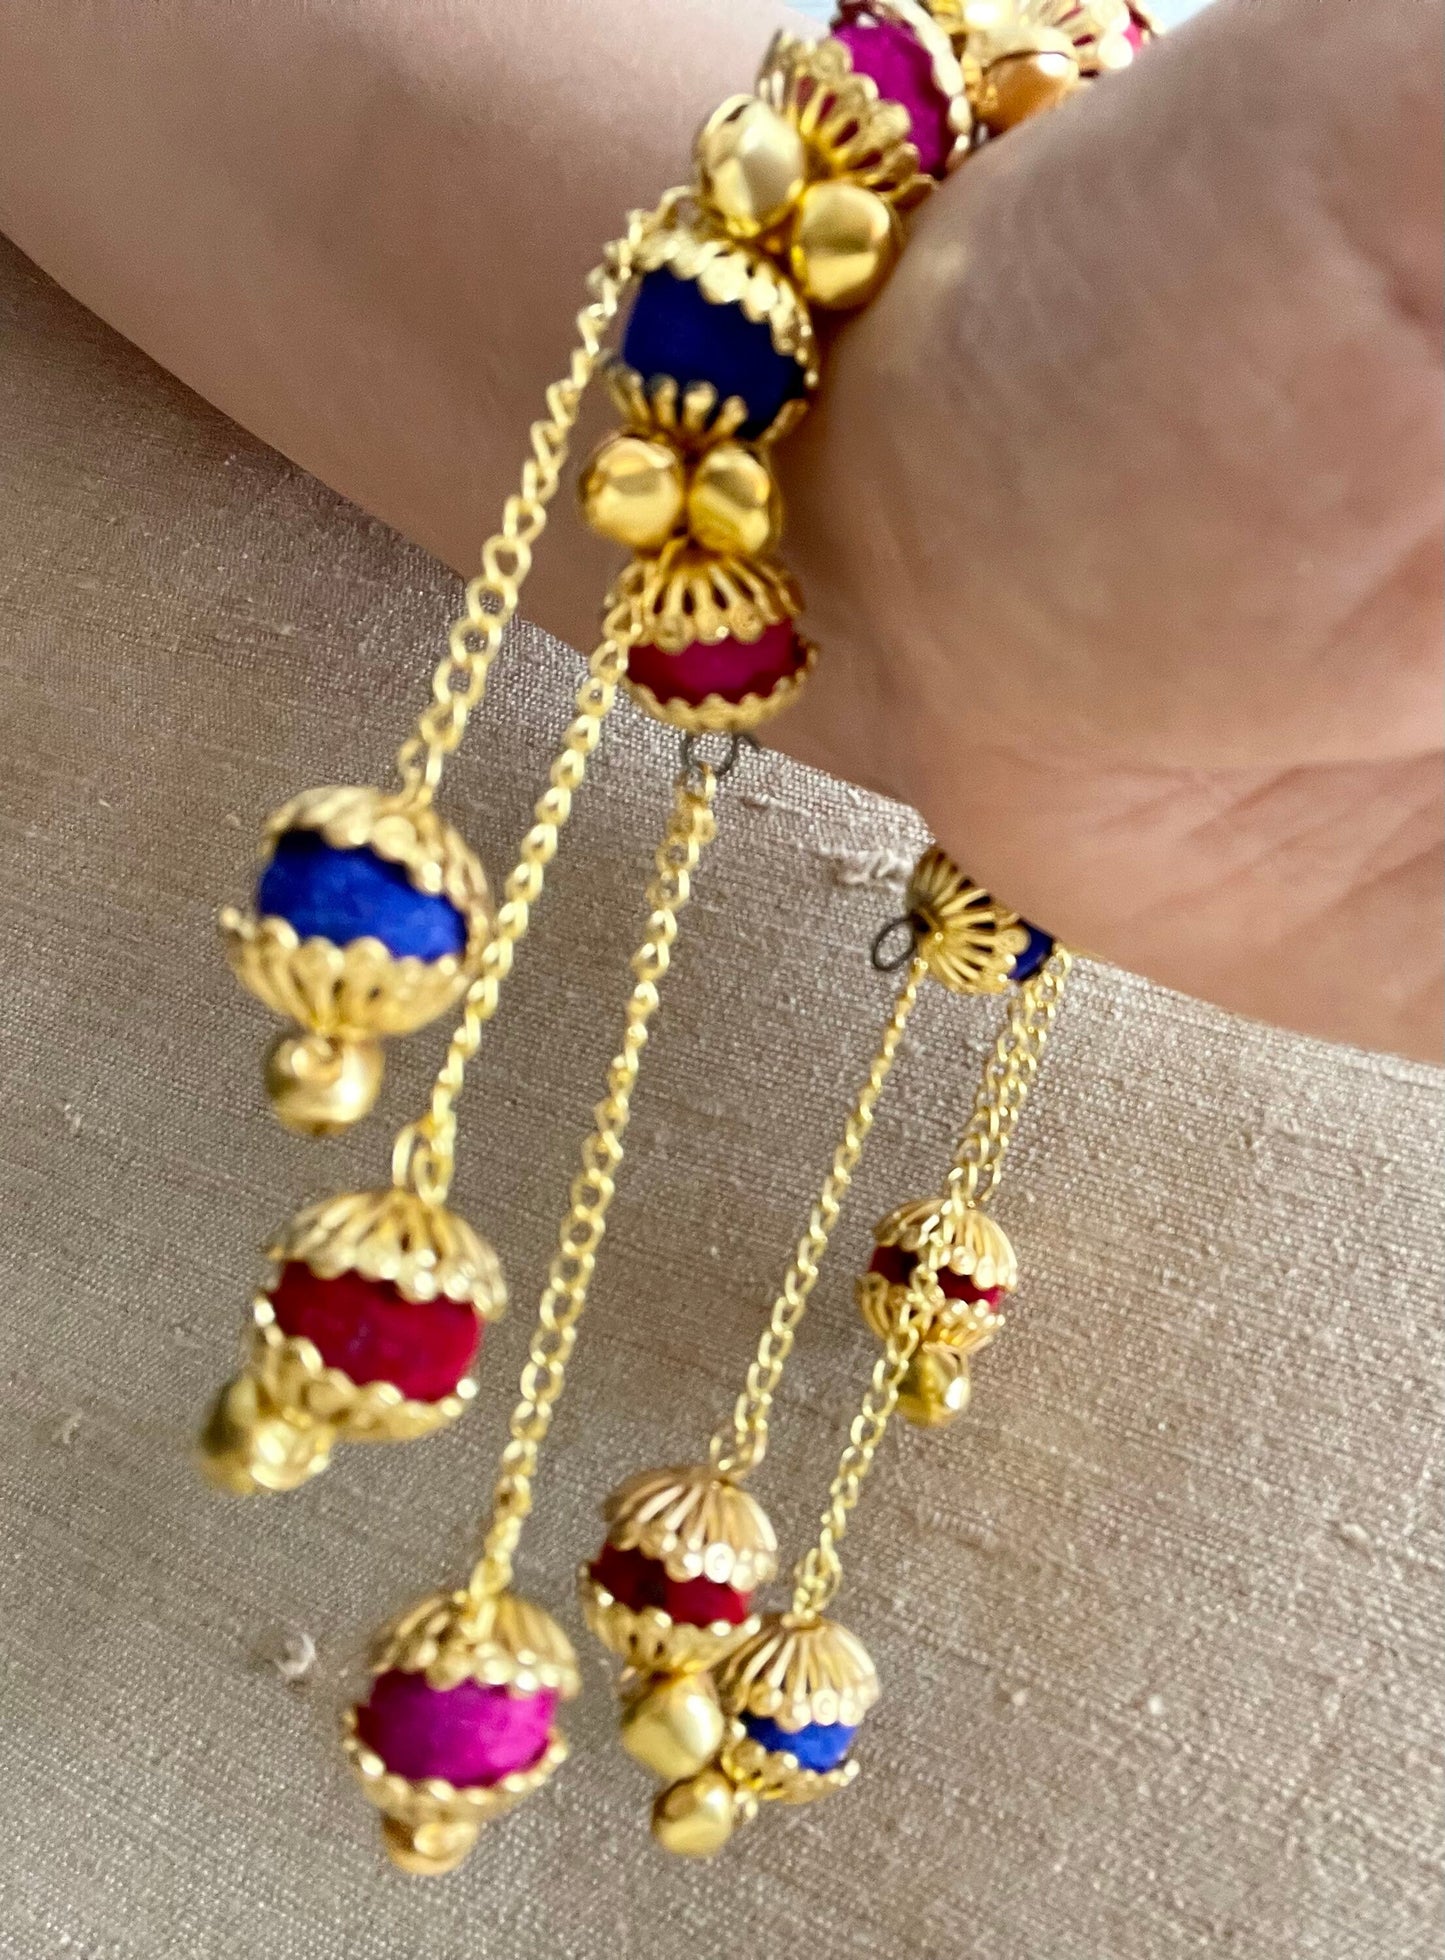 10 x Slip-on Gana Sangeet Mehndi Dholki Sangeet Ganey Ganaas Indian Wedding Bracelets Assorted colours Mehendi Mayoon Maiyan Mouli Kalava